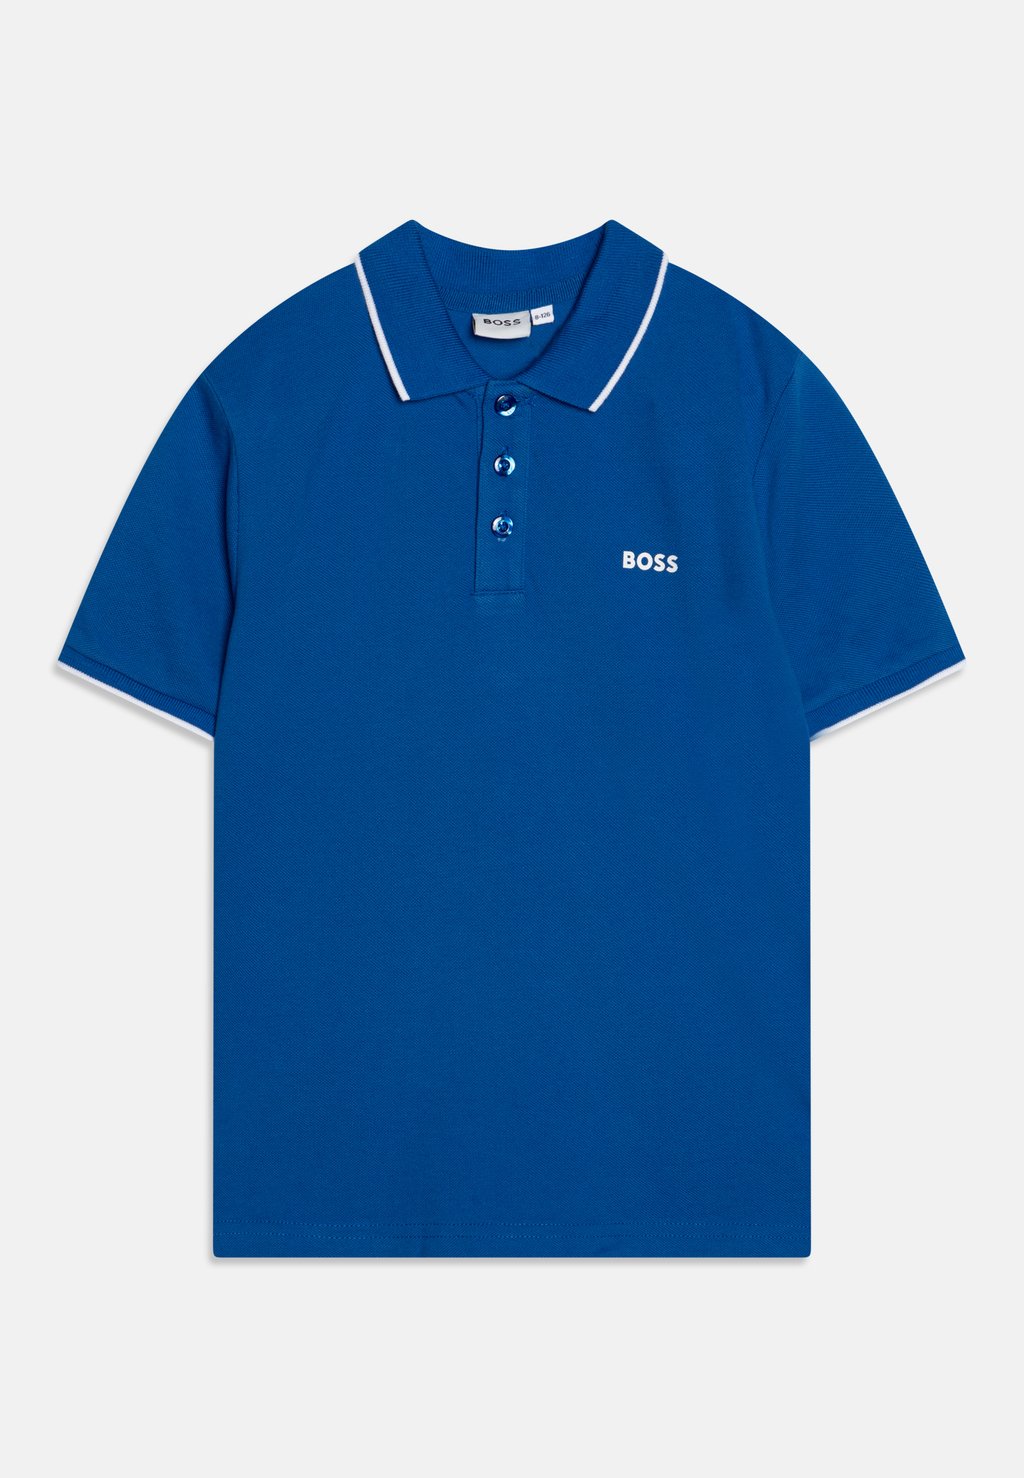 Рубашка-поло SHORT SLEEVE BOSS Kidswear, цвет electric blue рубашка поло short sleeve boss kidswear цвет white